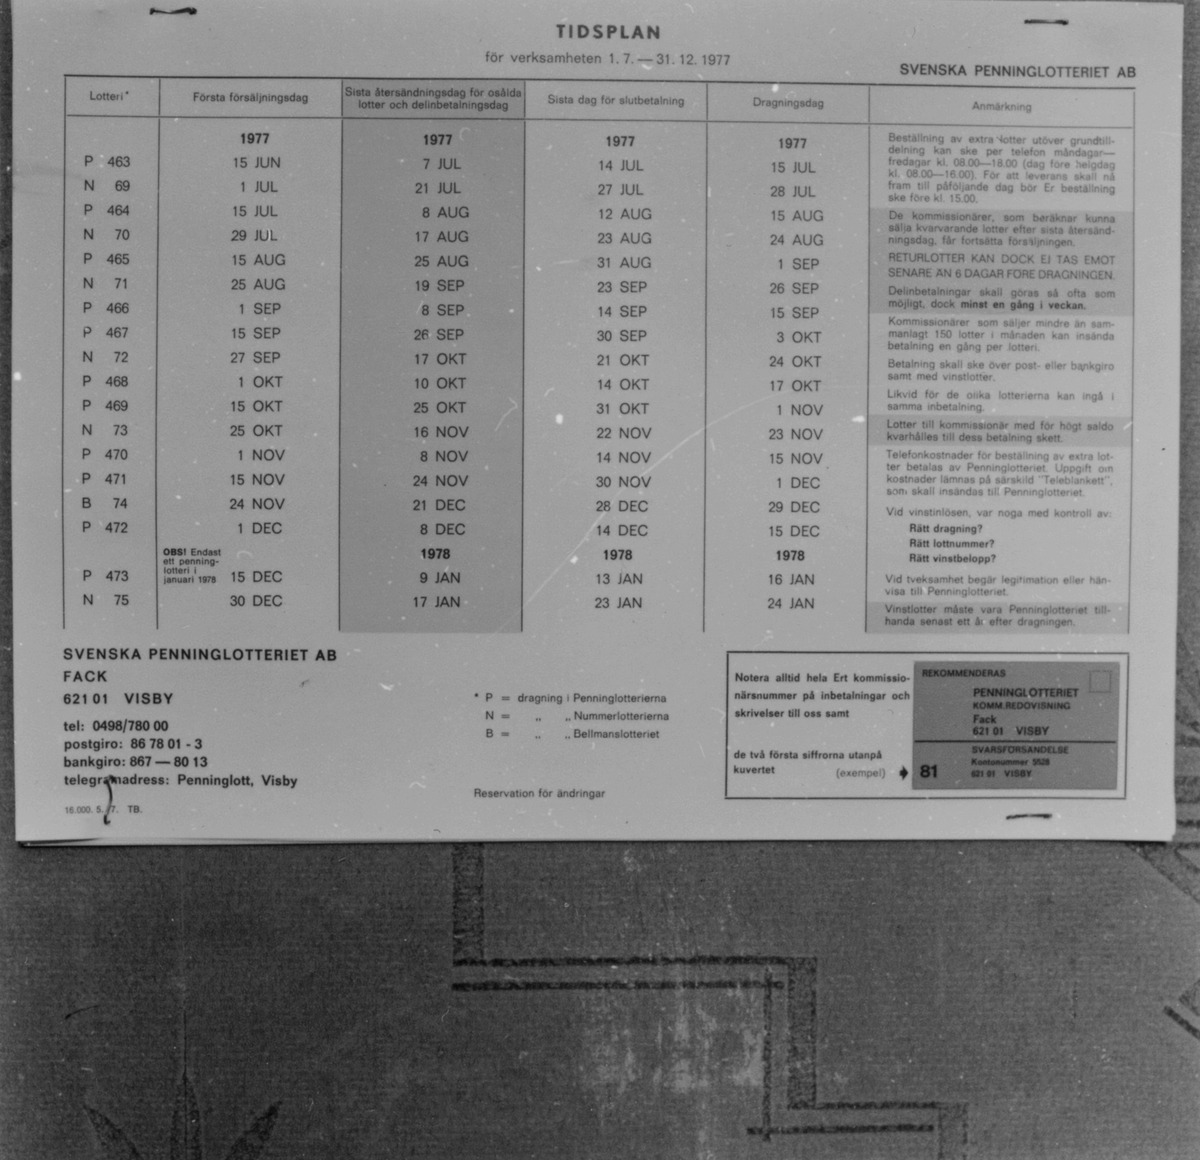 Bengtssons Tobakshandel
Nygatan 25-27.
Kvarteret 3-4.

Penninglotteriets tidplan, 1.7-31.12 1977